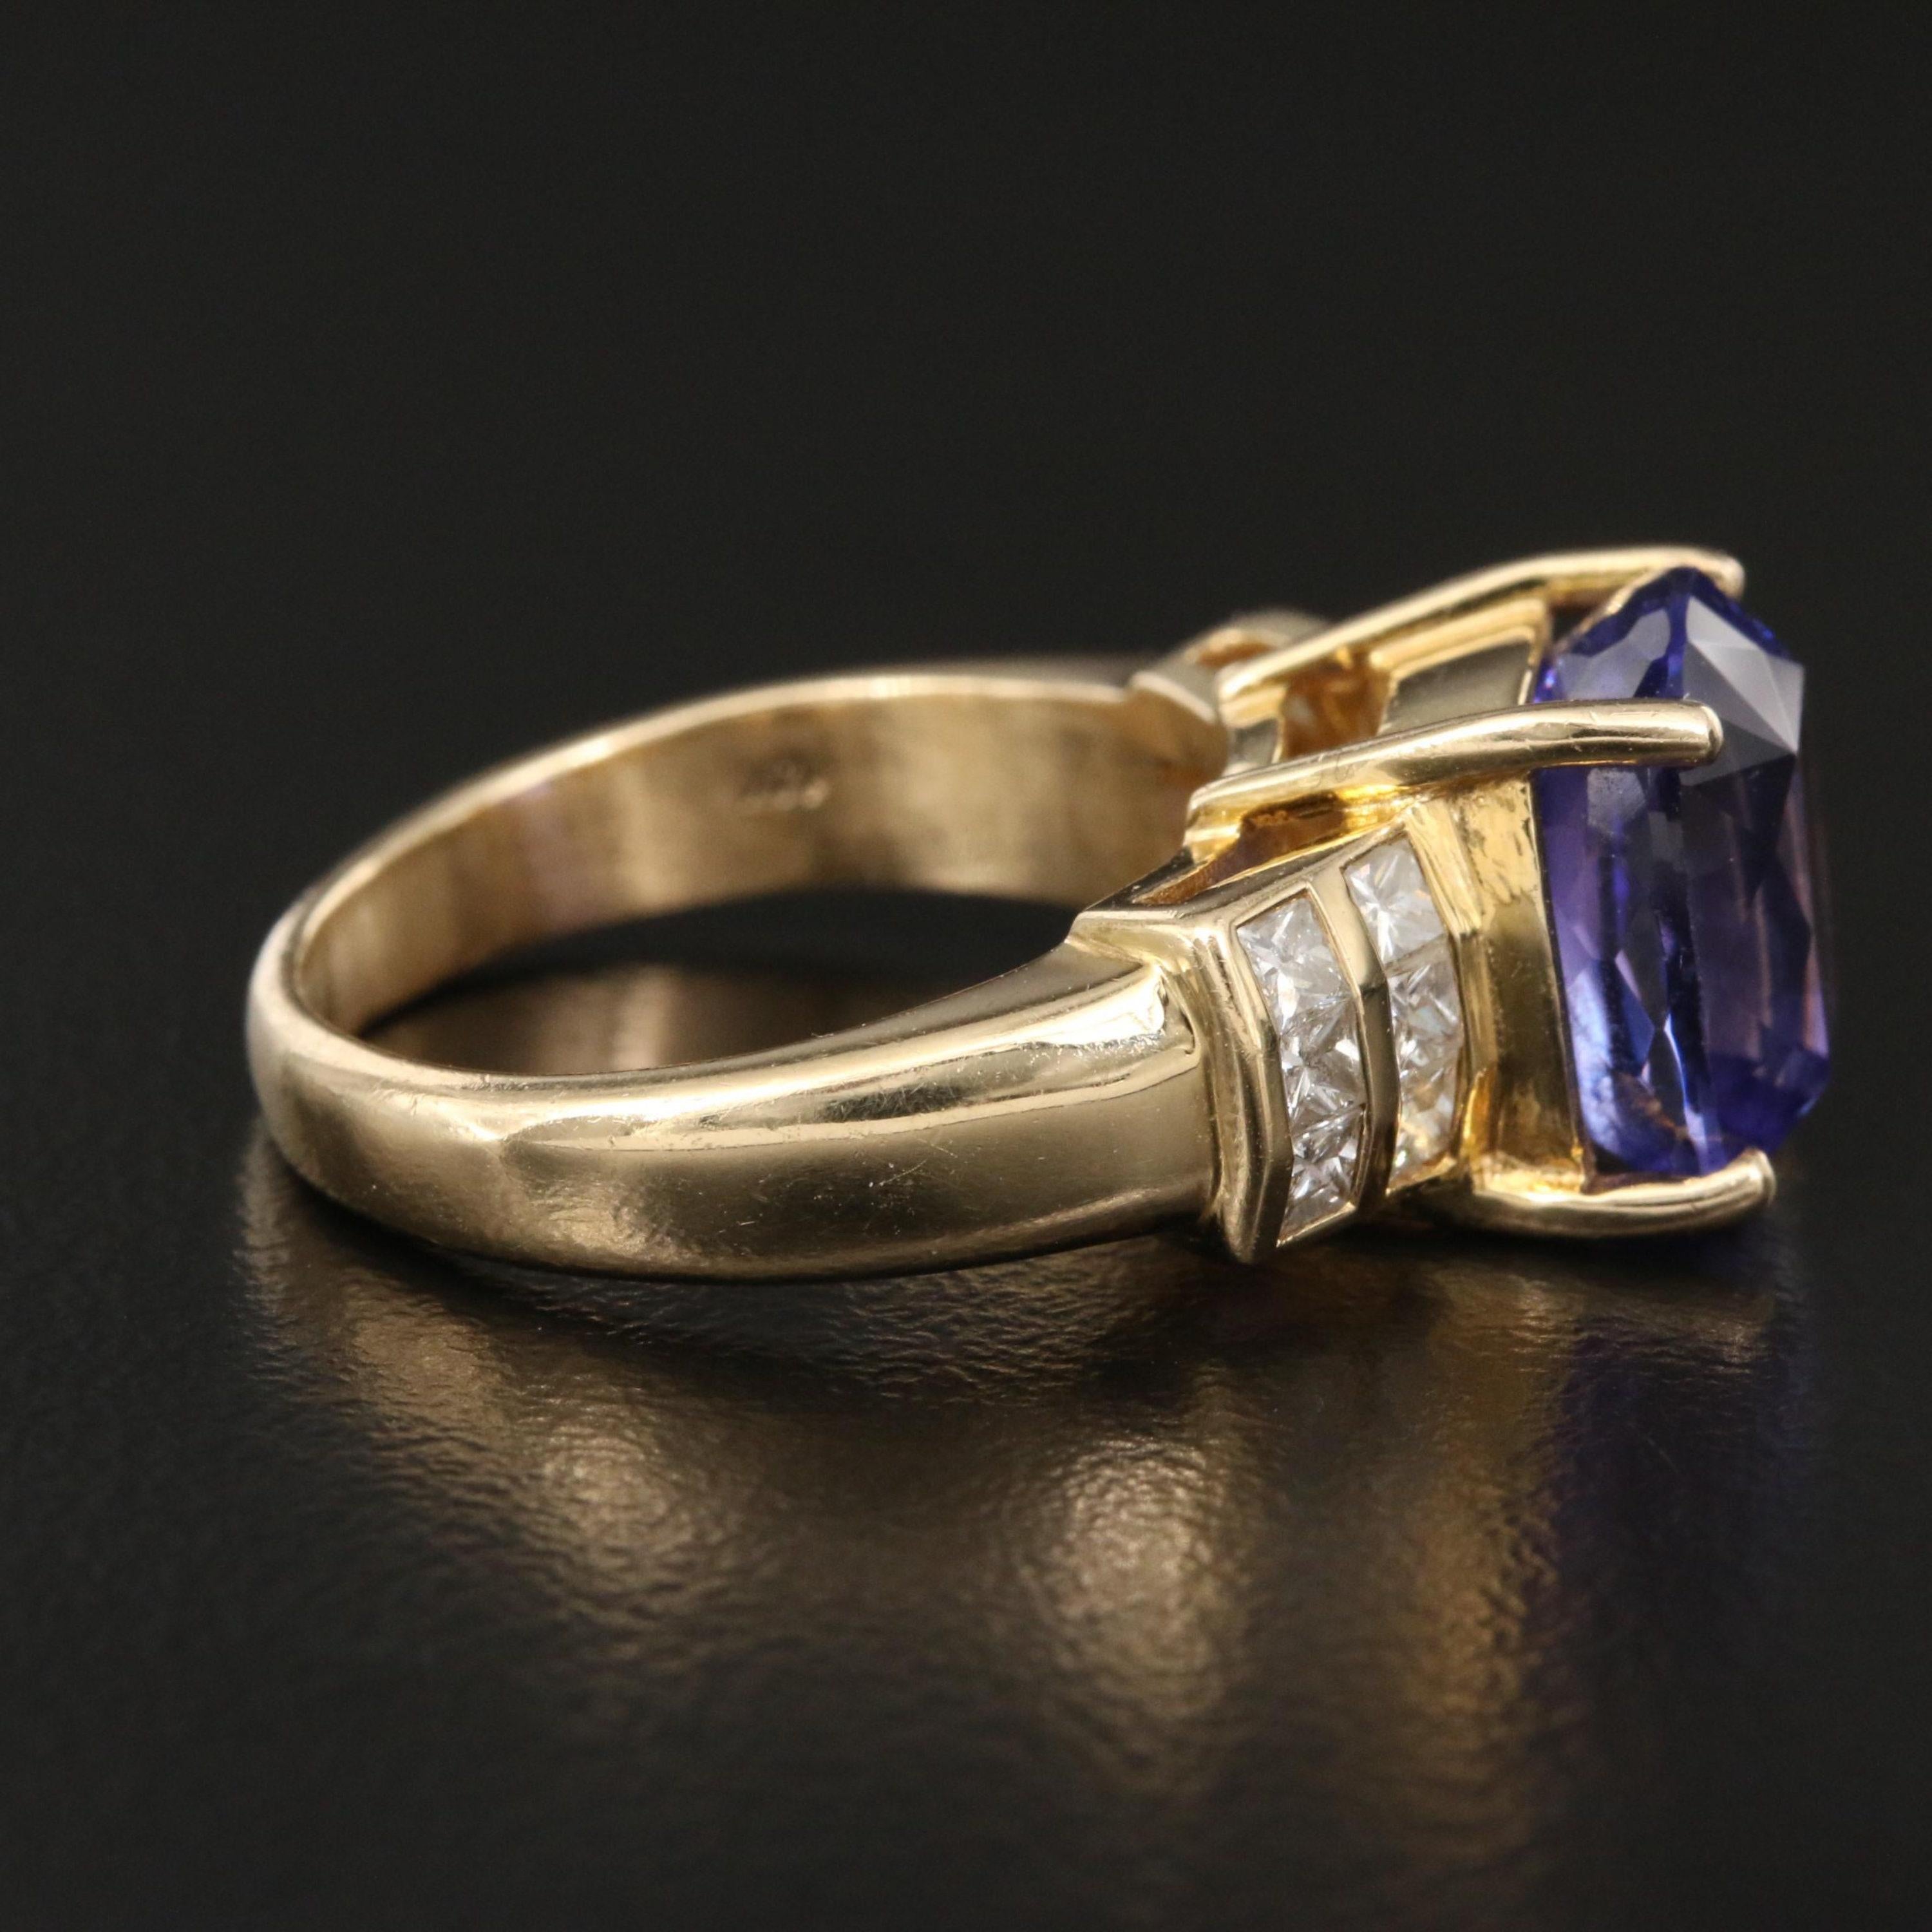 For Sale:  5 Carat Cushion Cut Tanzanite Engagement Ring, Yellow Gold Diamond Wedding Ring 2